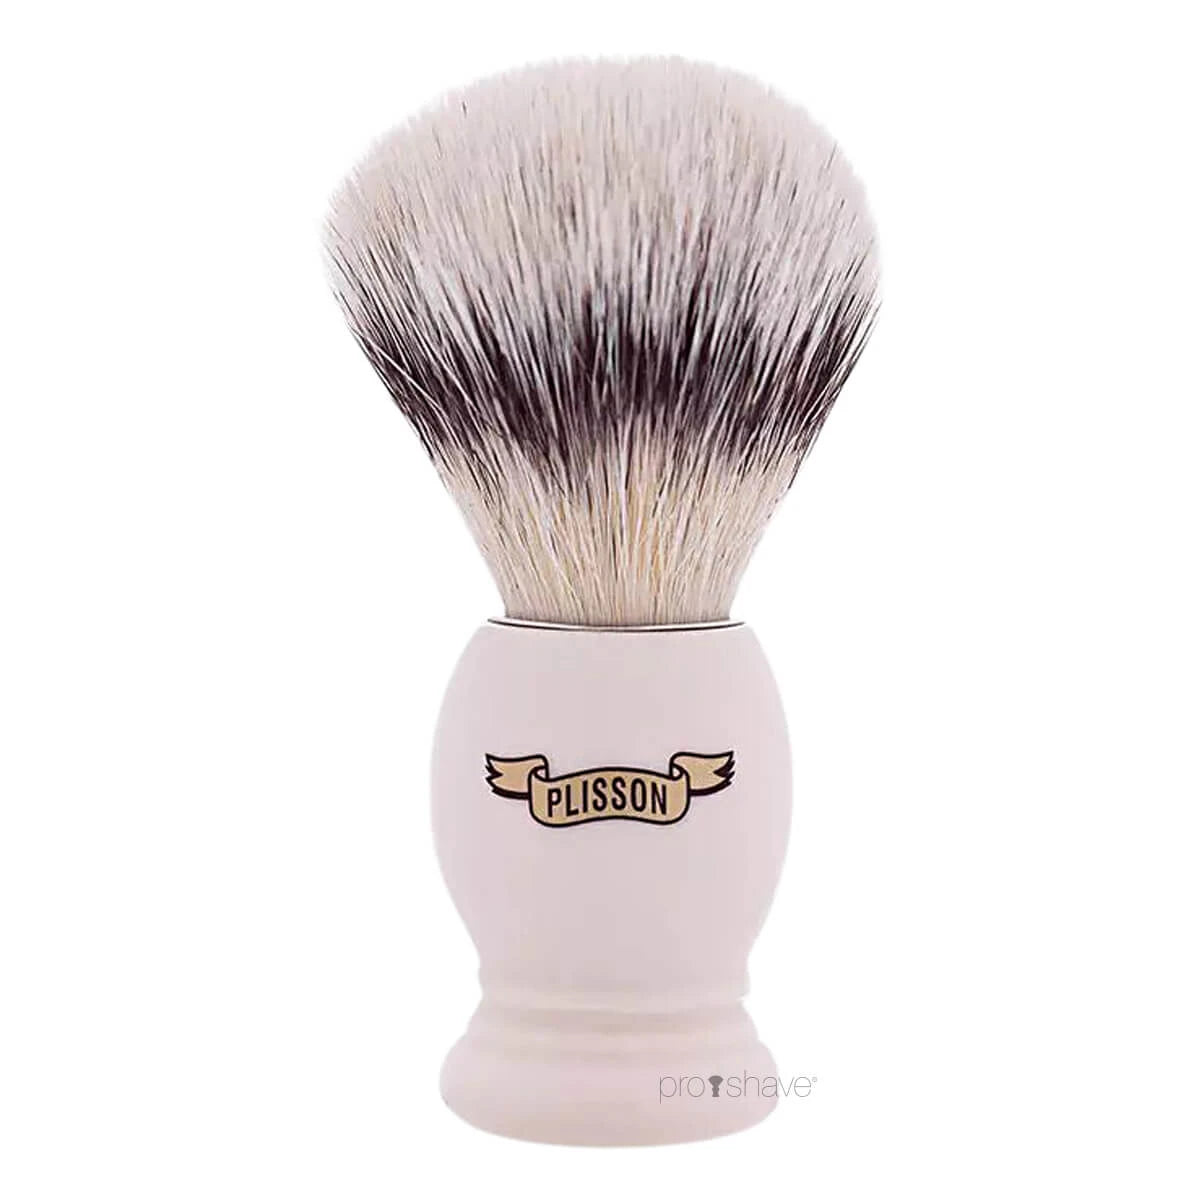 Plisson Shaving Brush, High Mountain White Fibre & Imit. Ivory- Size 12